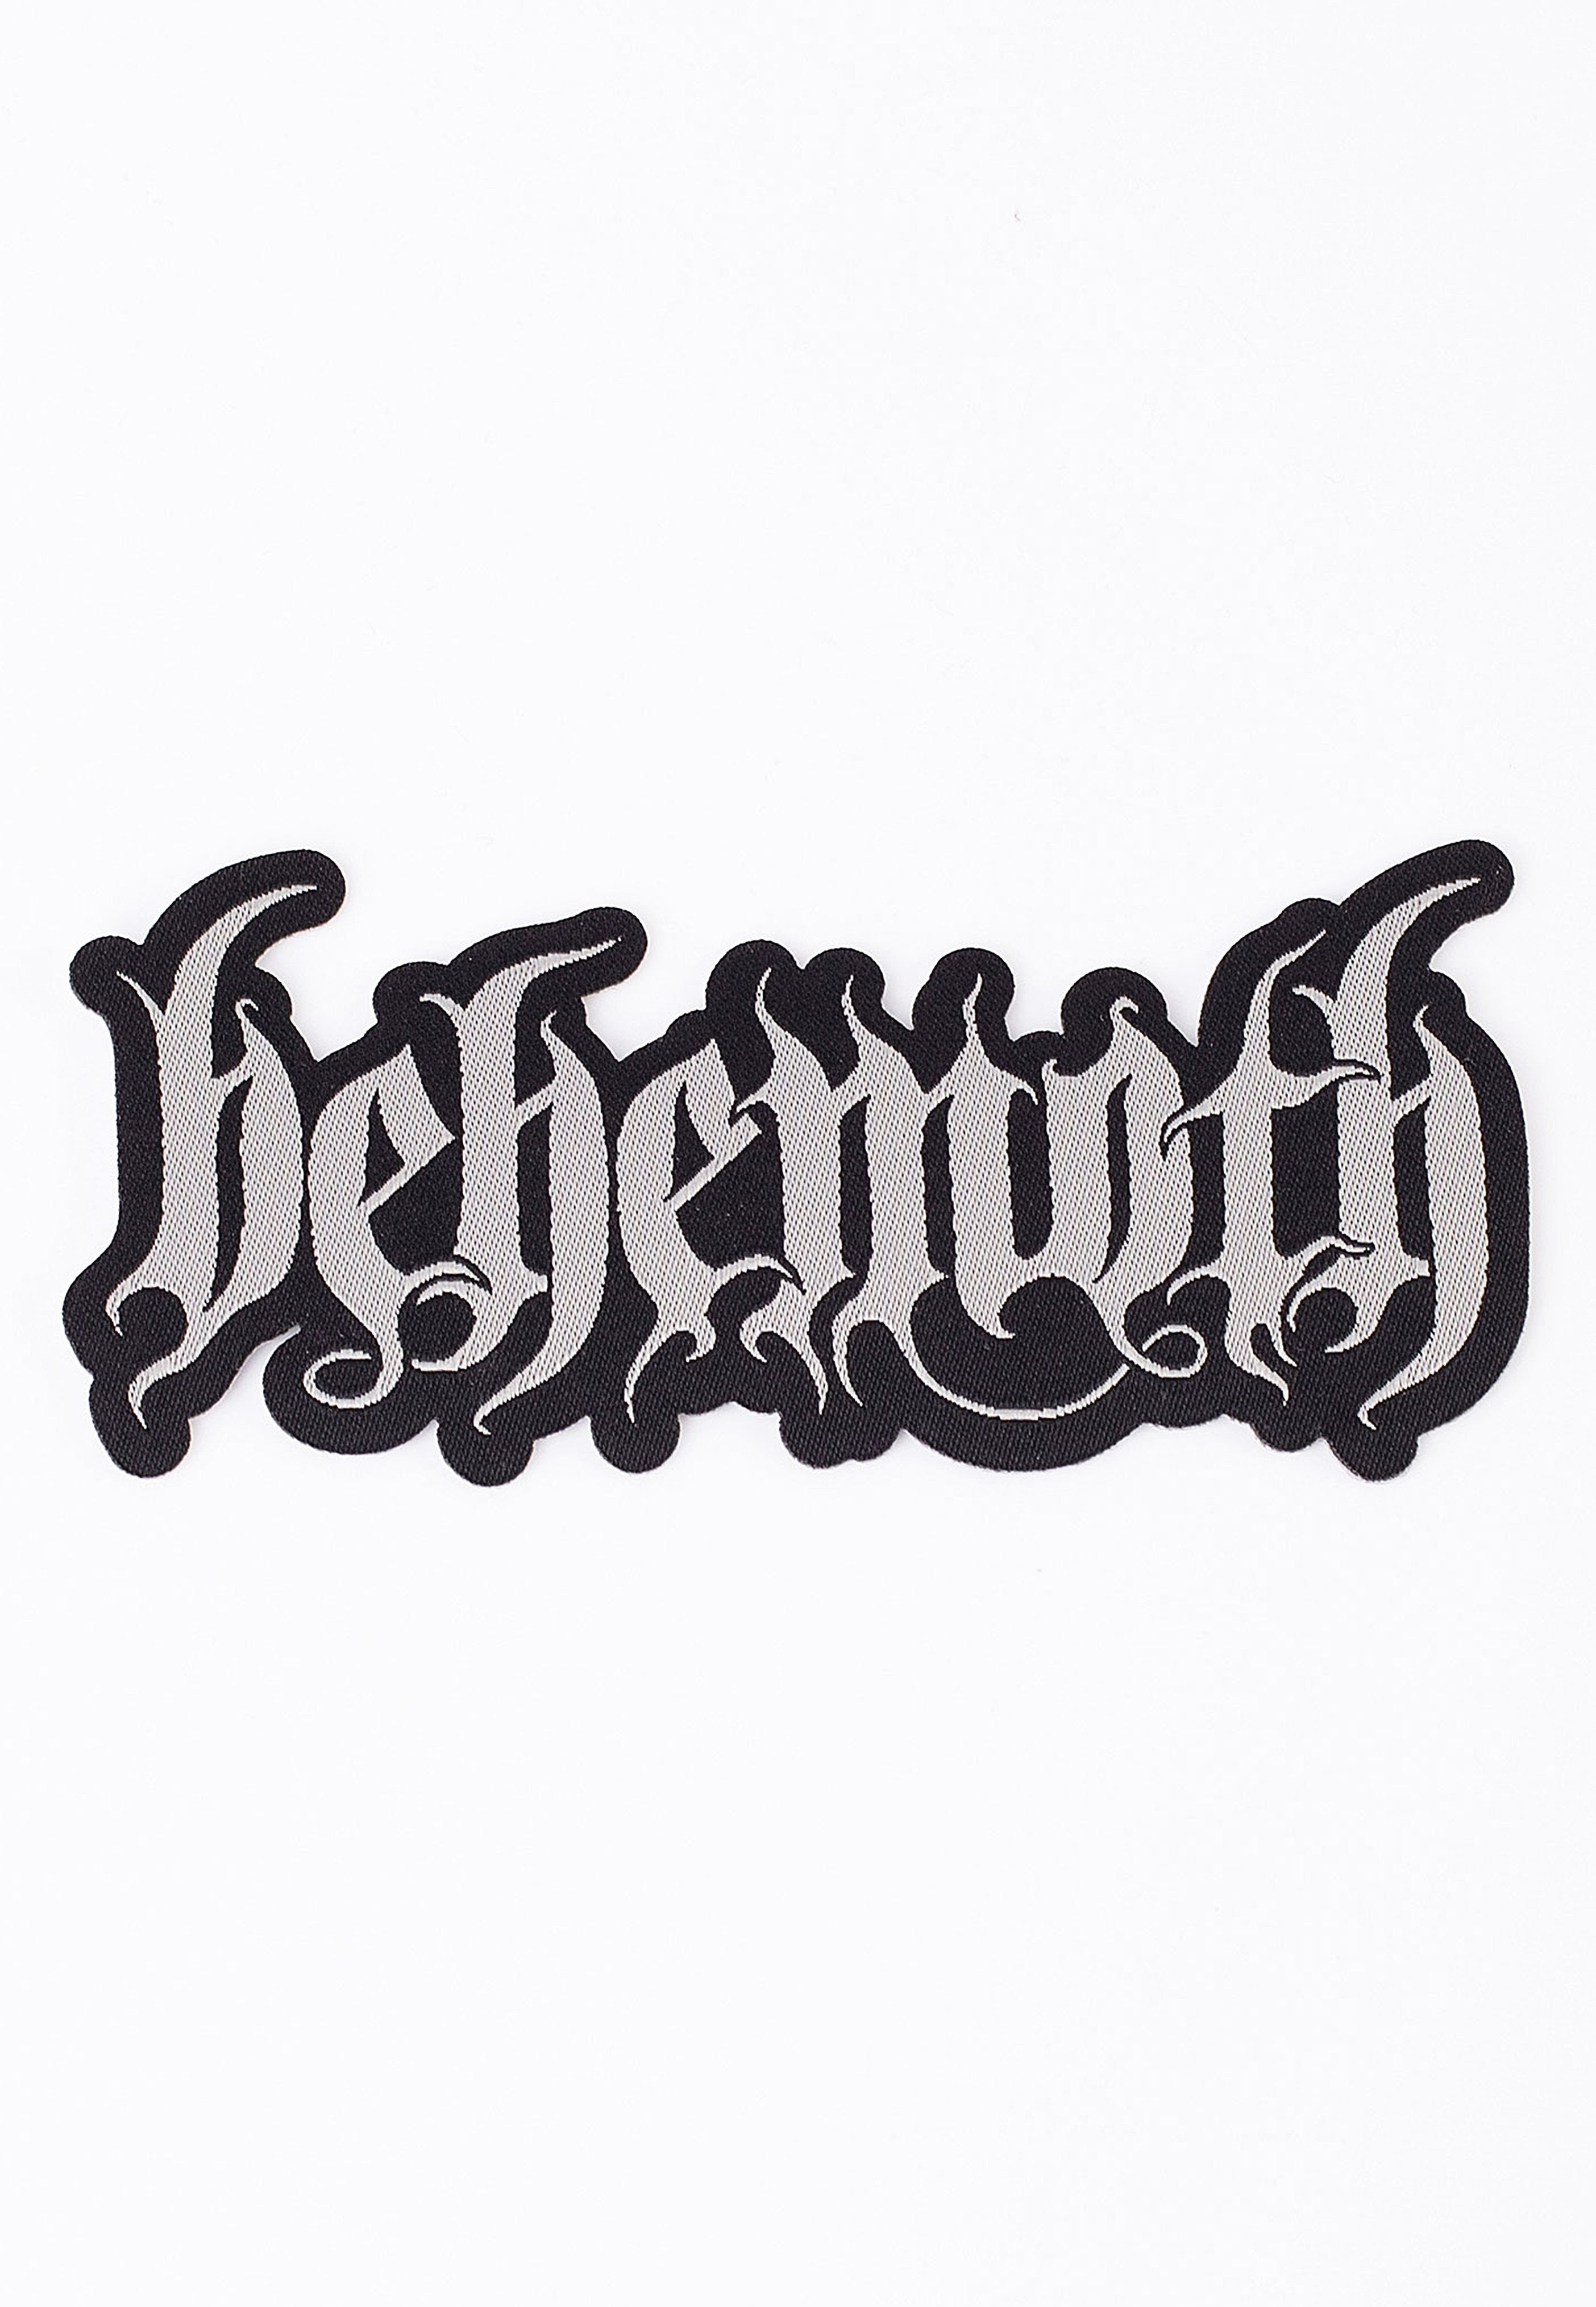 Behemoth - Logo Die Cut - Patch